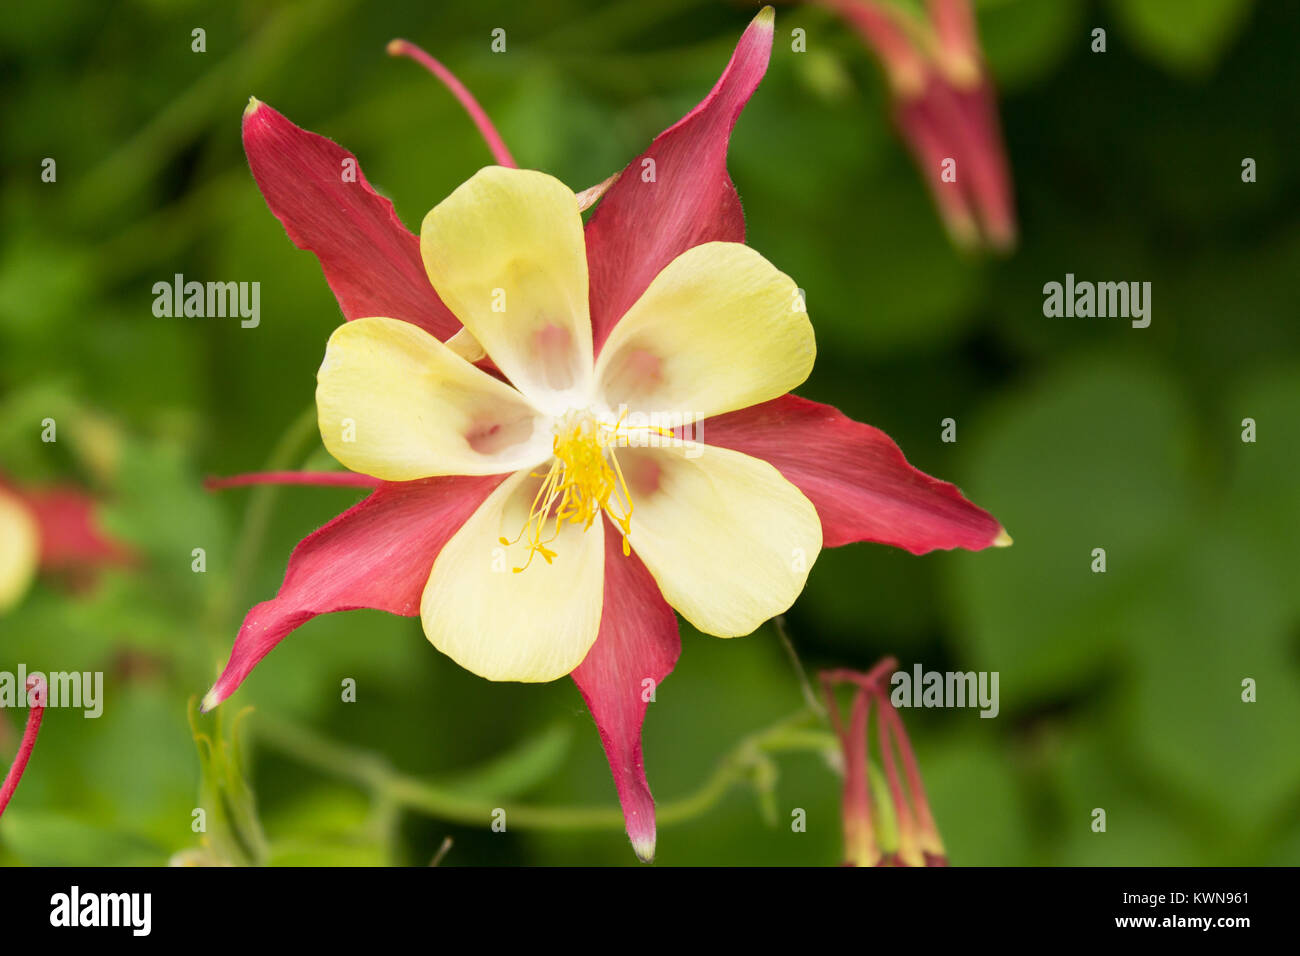 Beautiful red-yellow flower aquilegia closeup on blurred background Stock Photo